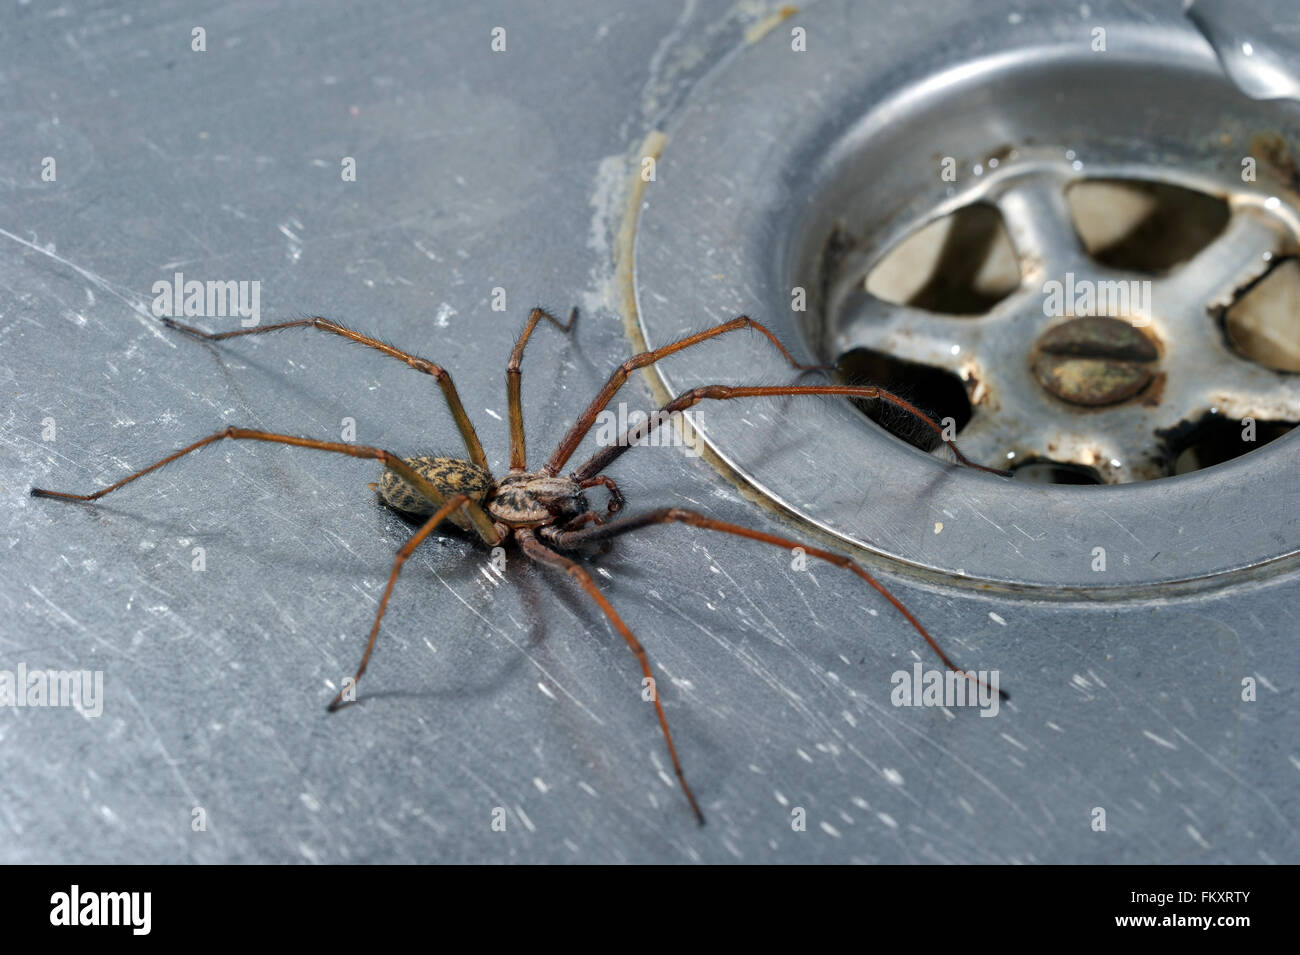 European common house spider (Eratigena atrica / Tegenaria atrica / Philoica atrica) trapped in kitchen sink Stock Photo